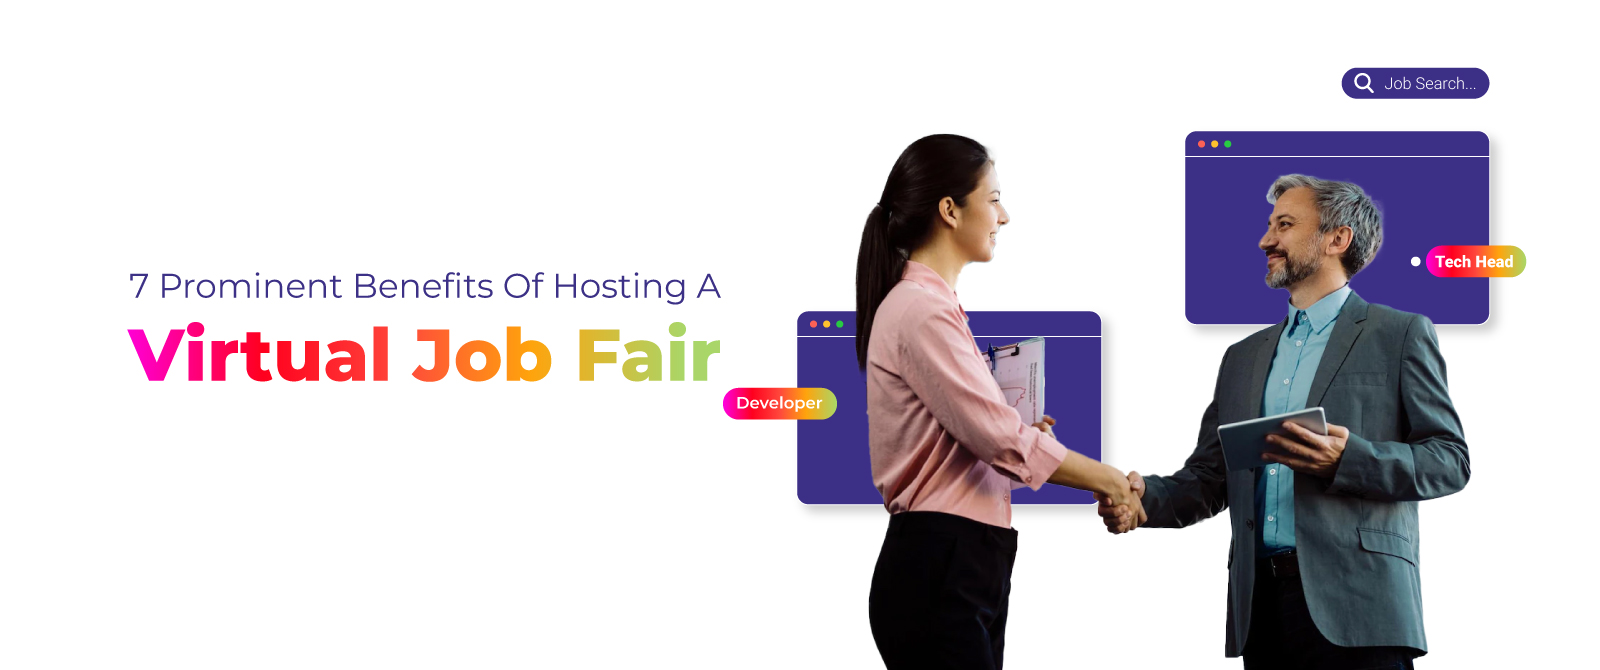 7 Prominent Benefits of Hosting a Virtual Job Fair